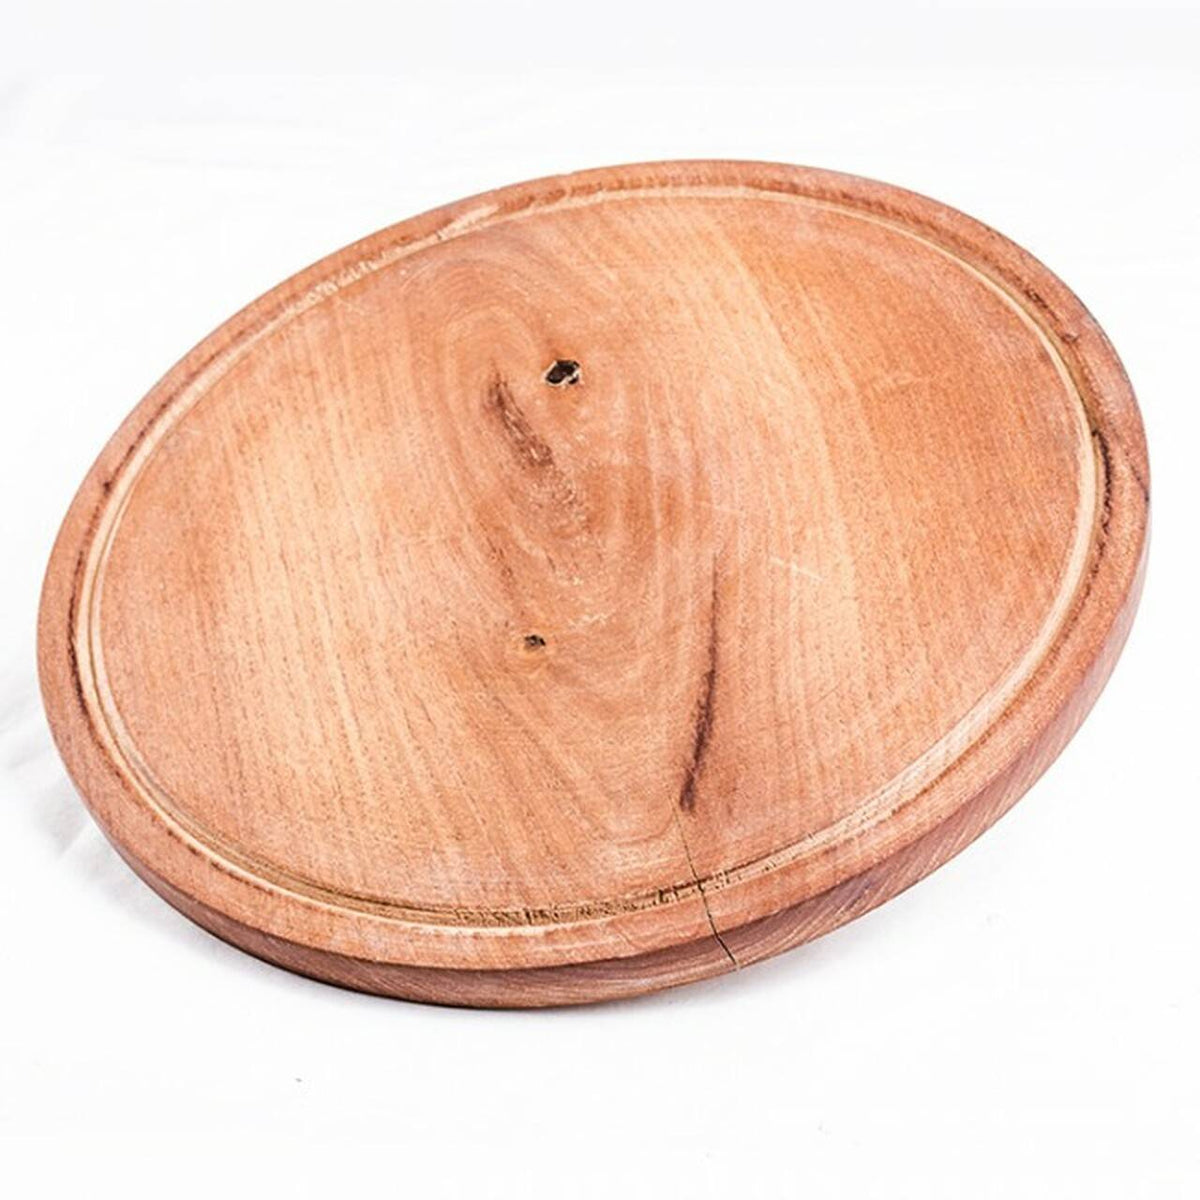 Plato de Madera Wooden Plate for BBQ, 24 cm / 9.44 diameter